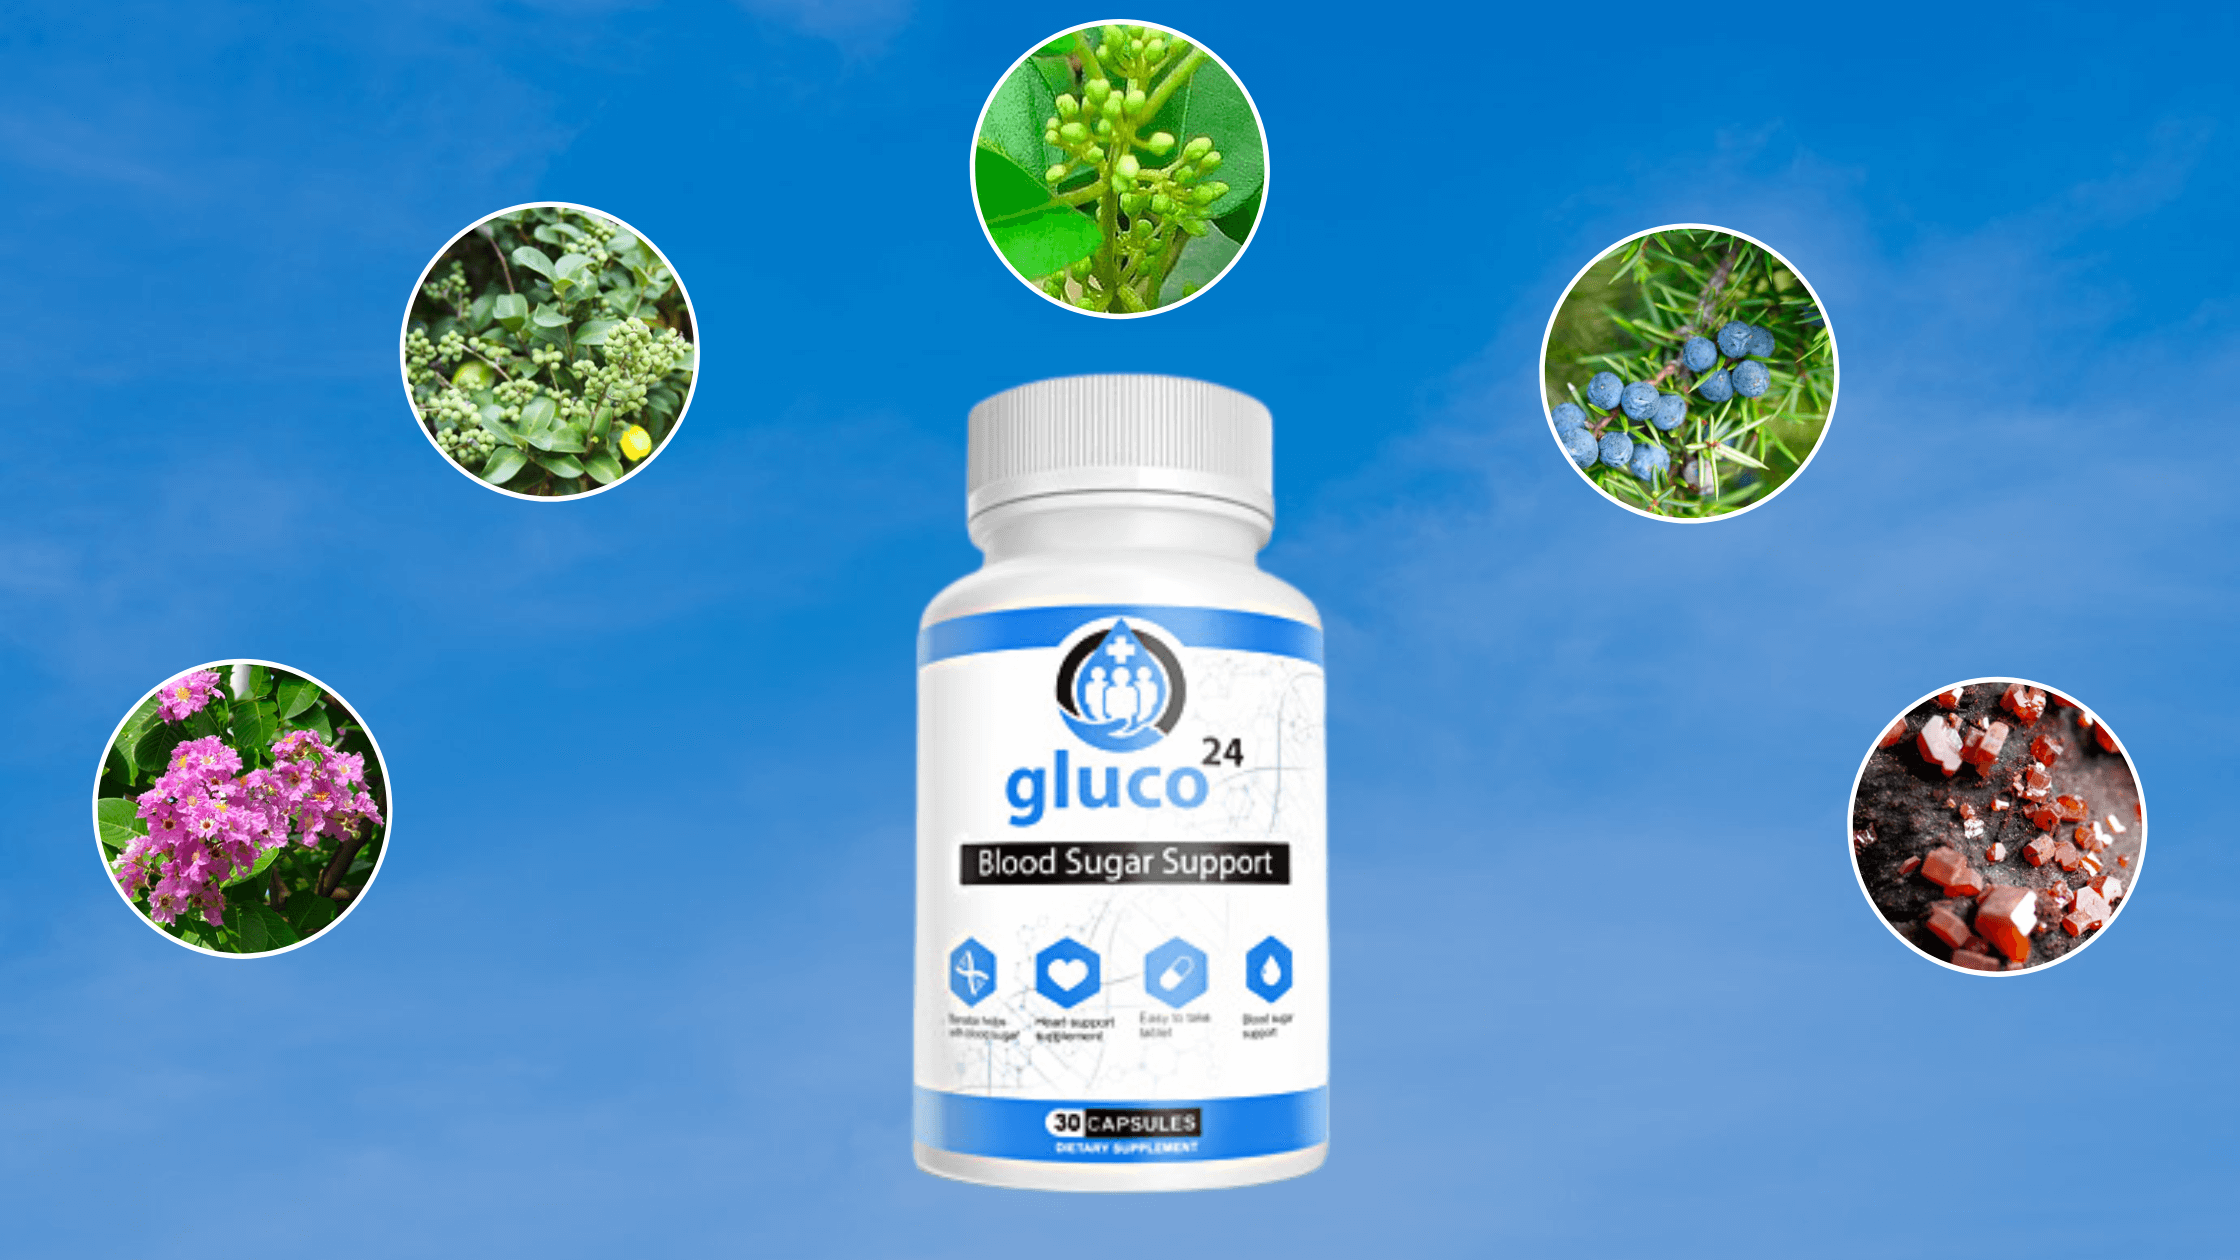 Gluco24 Ingredients